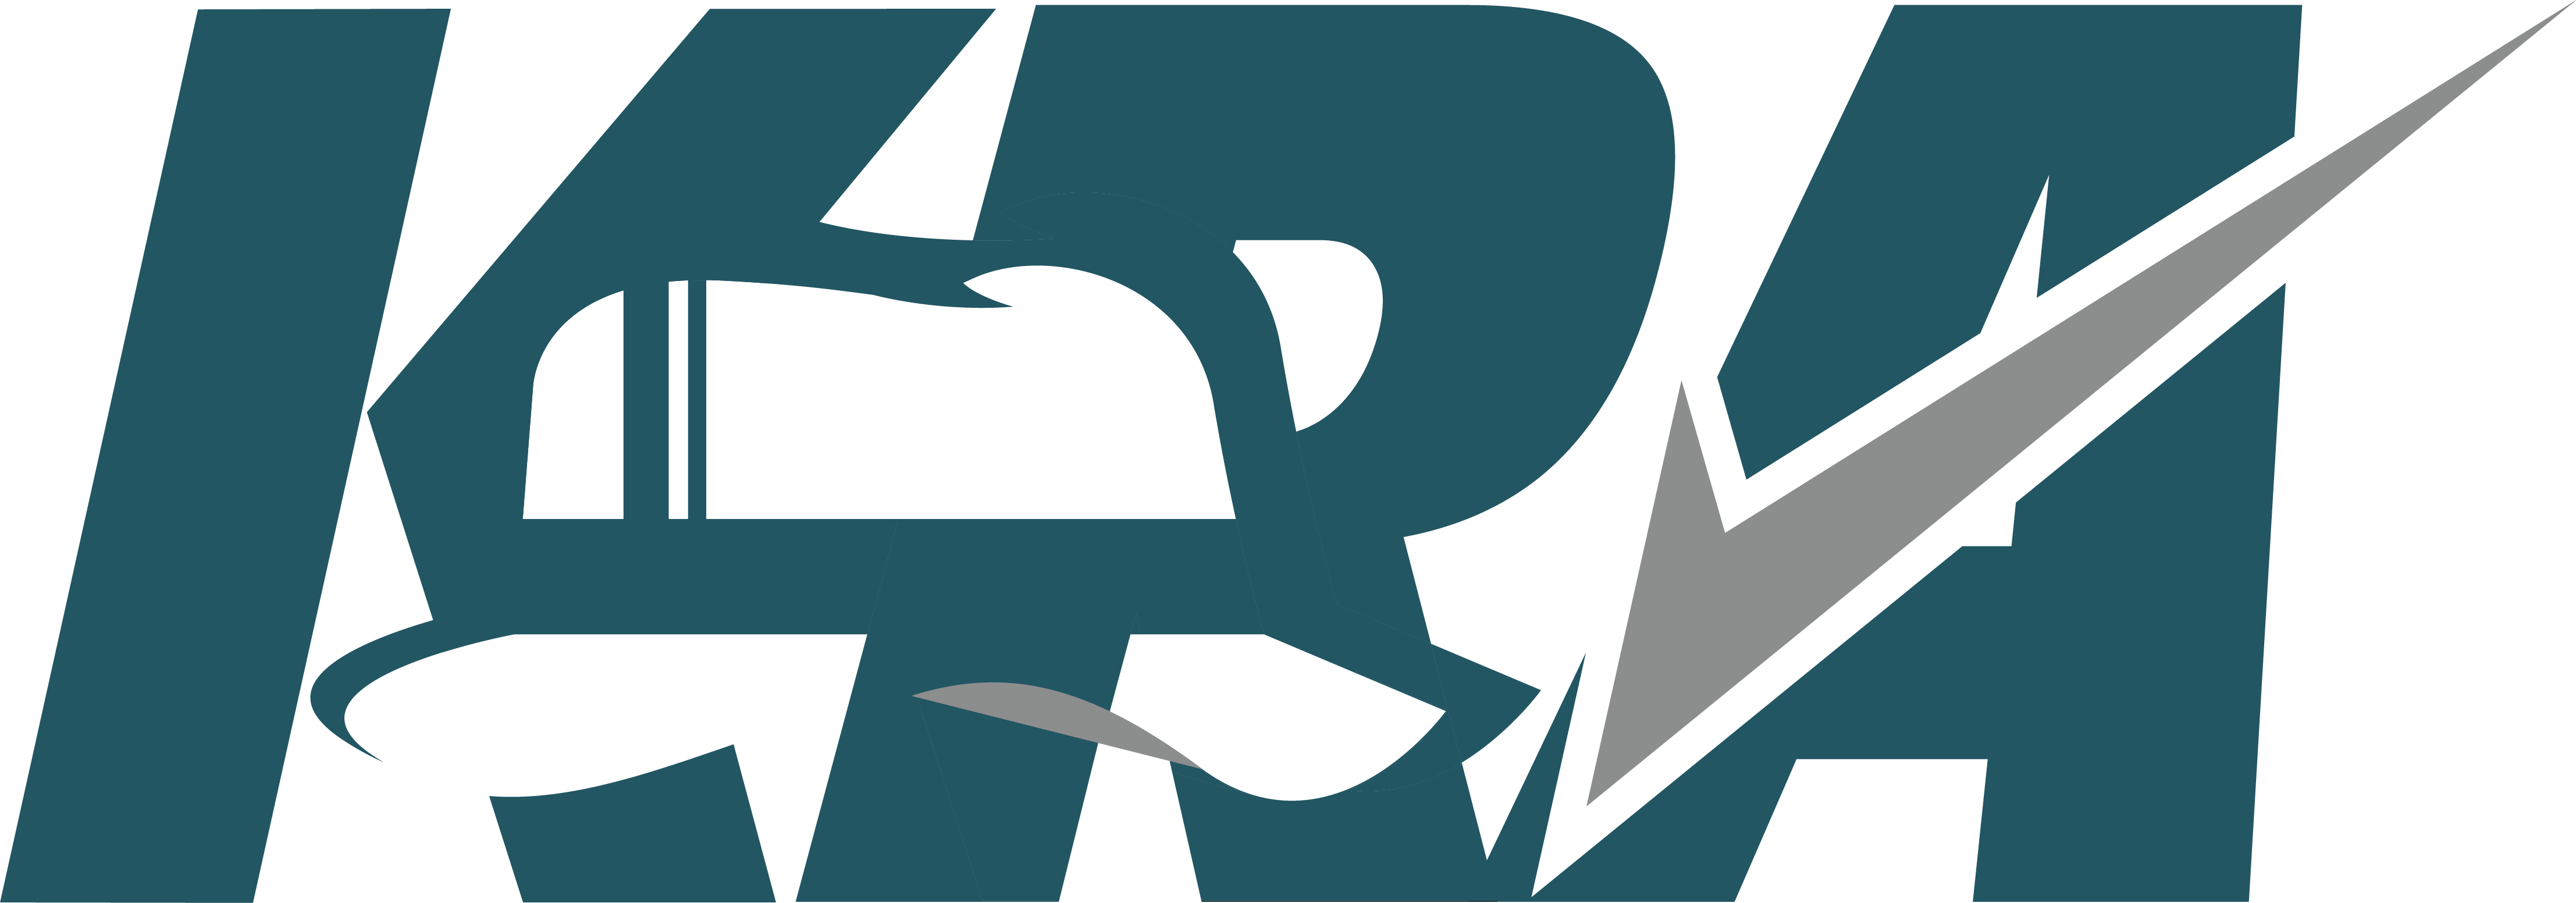 KRA_logo